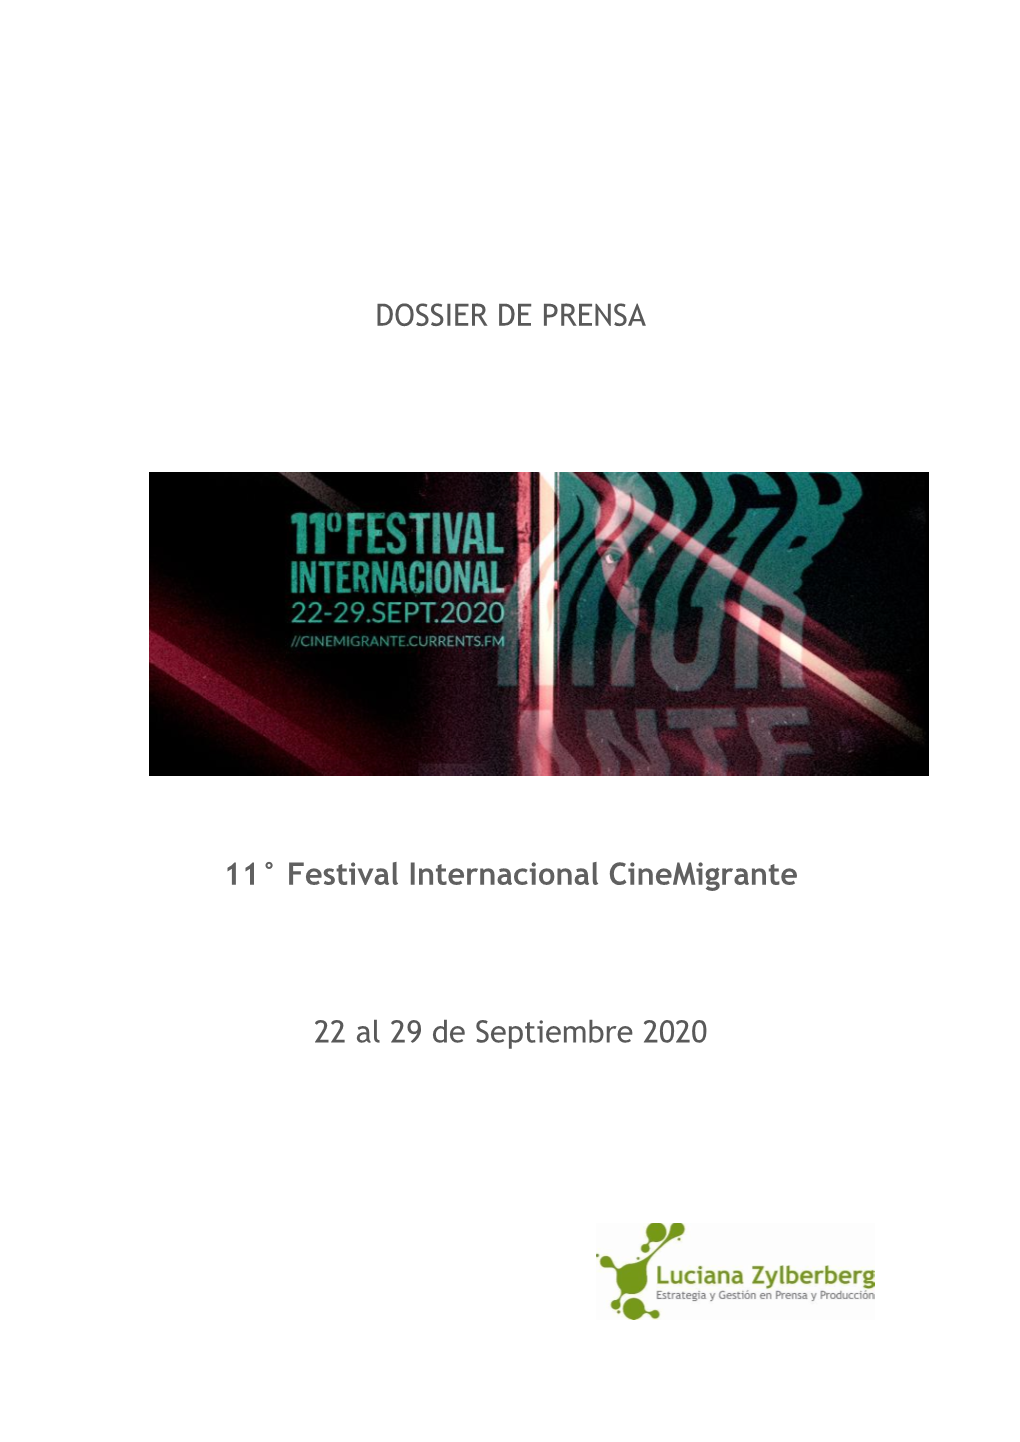 DOSSIER DE PRENSA 11° Festival Internacional Cinemigrante 22 Al 29